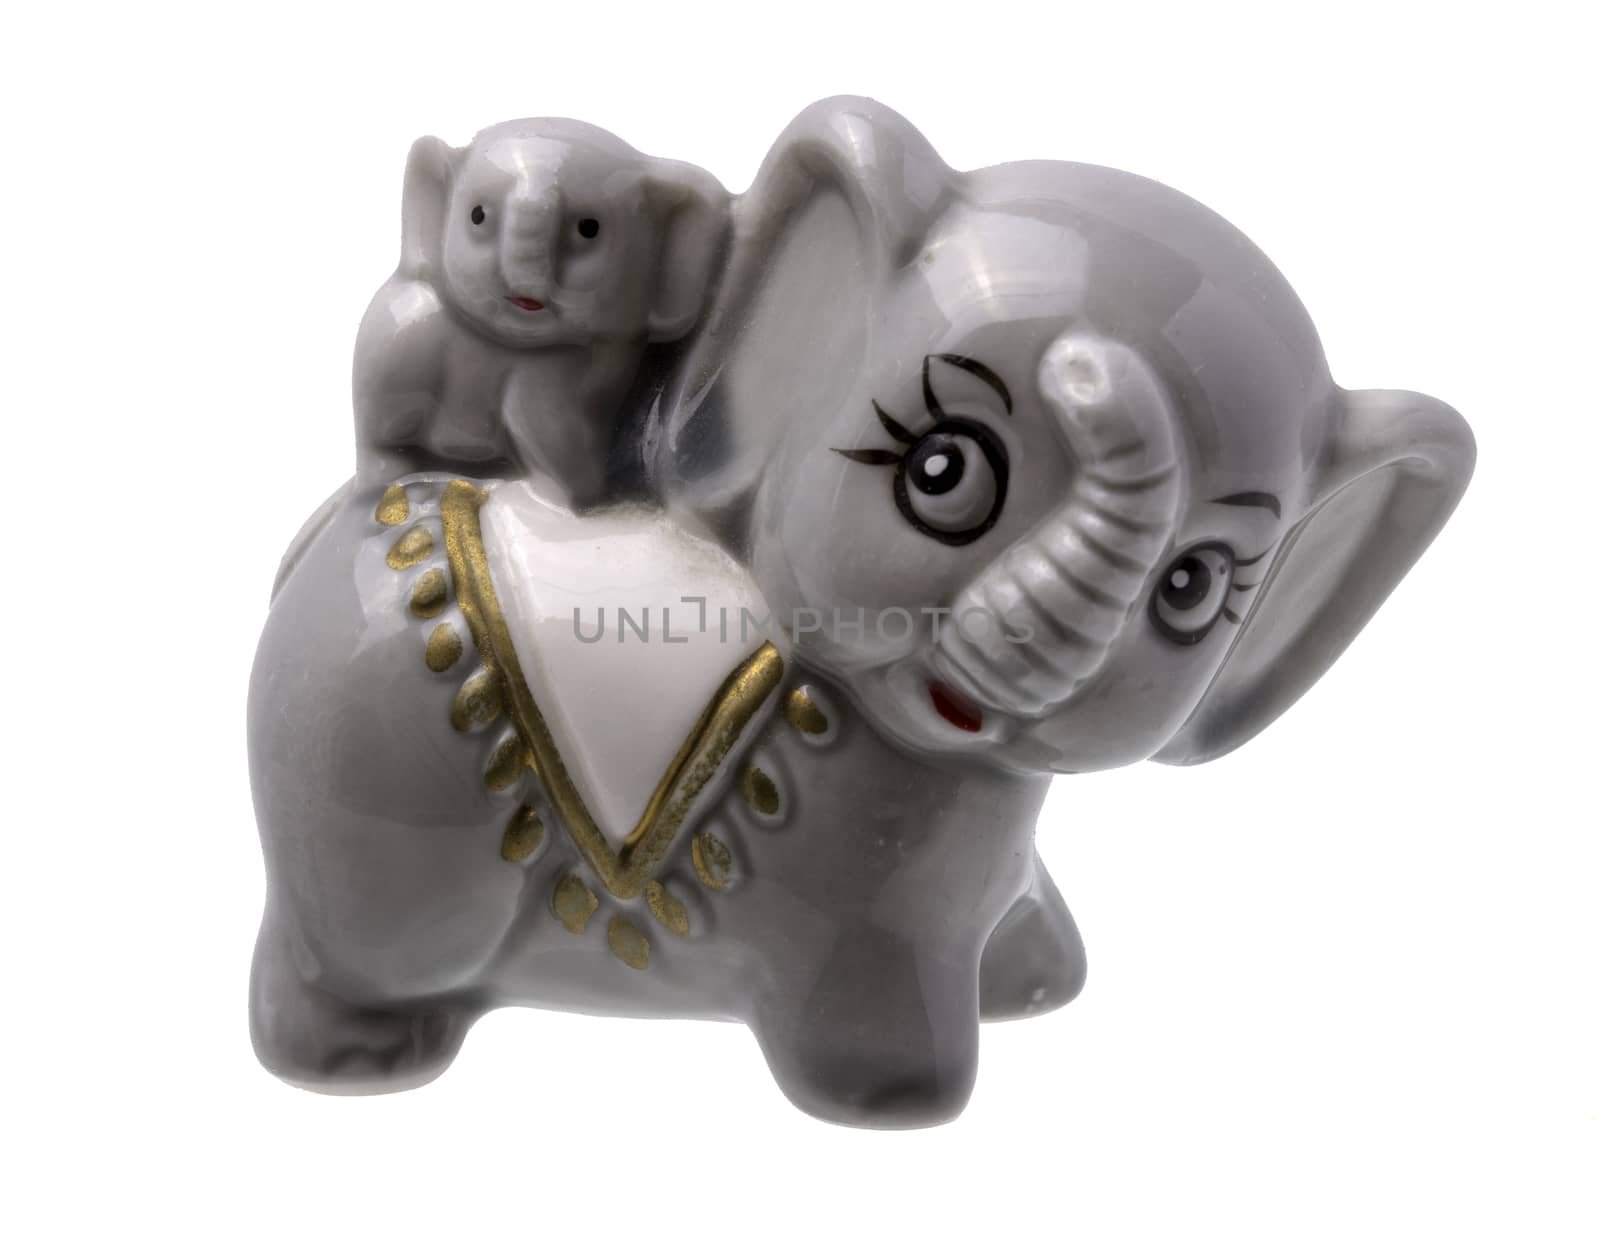 Grey Elephant And Elephant Baby Figurine On White Background by gstalker